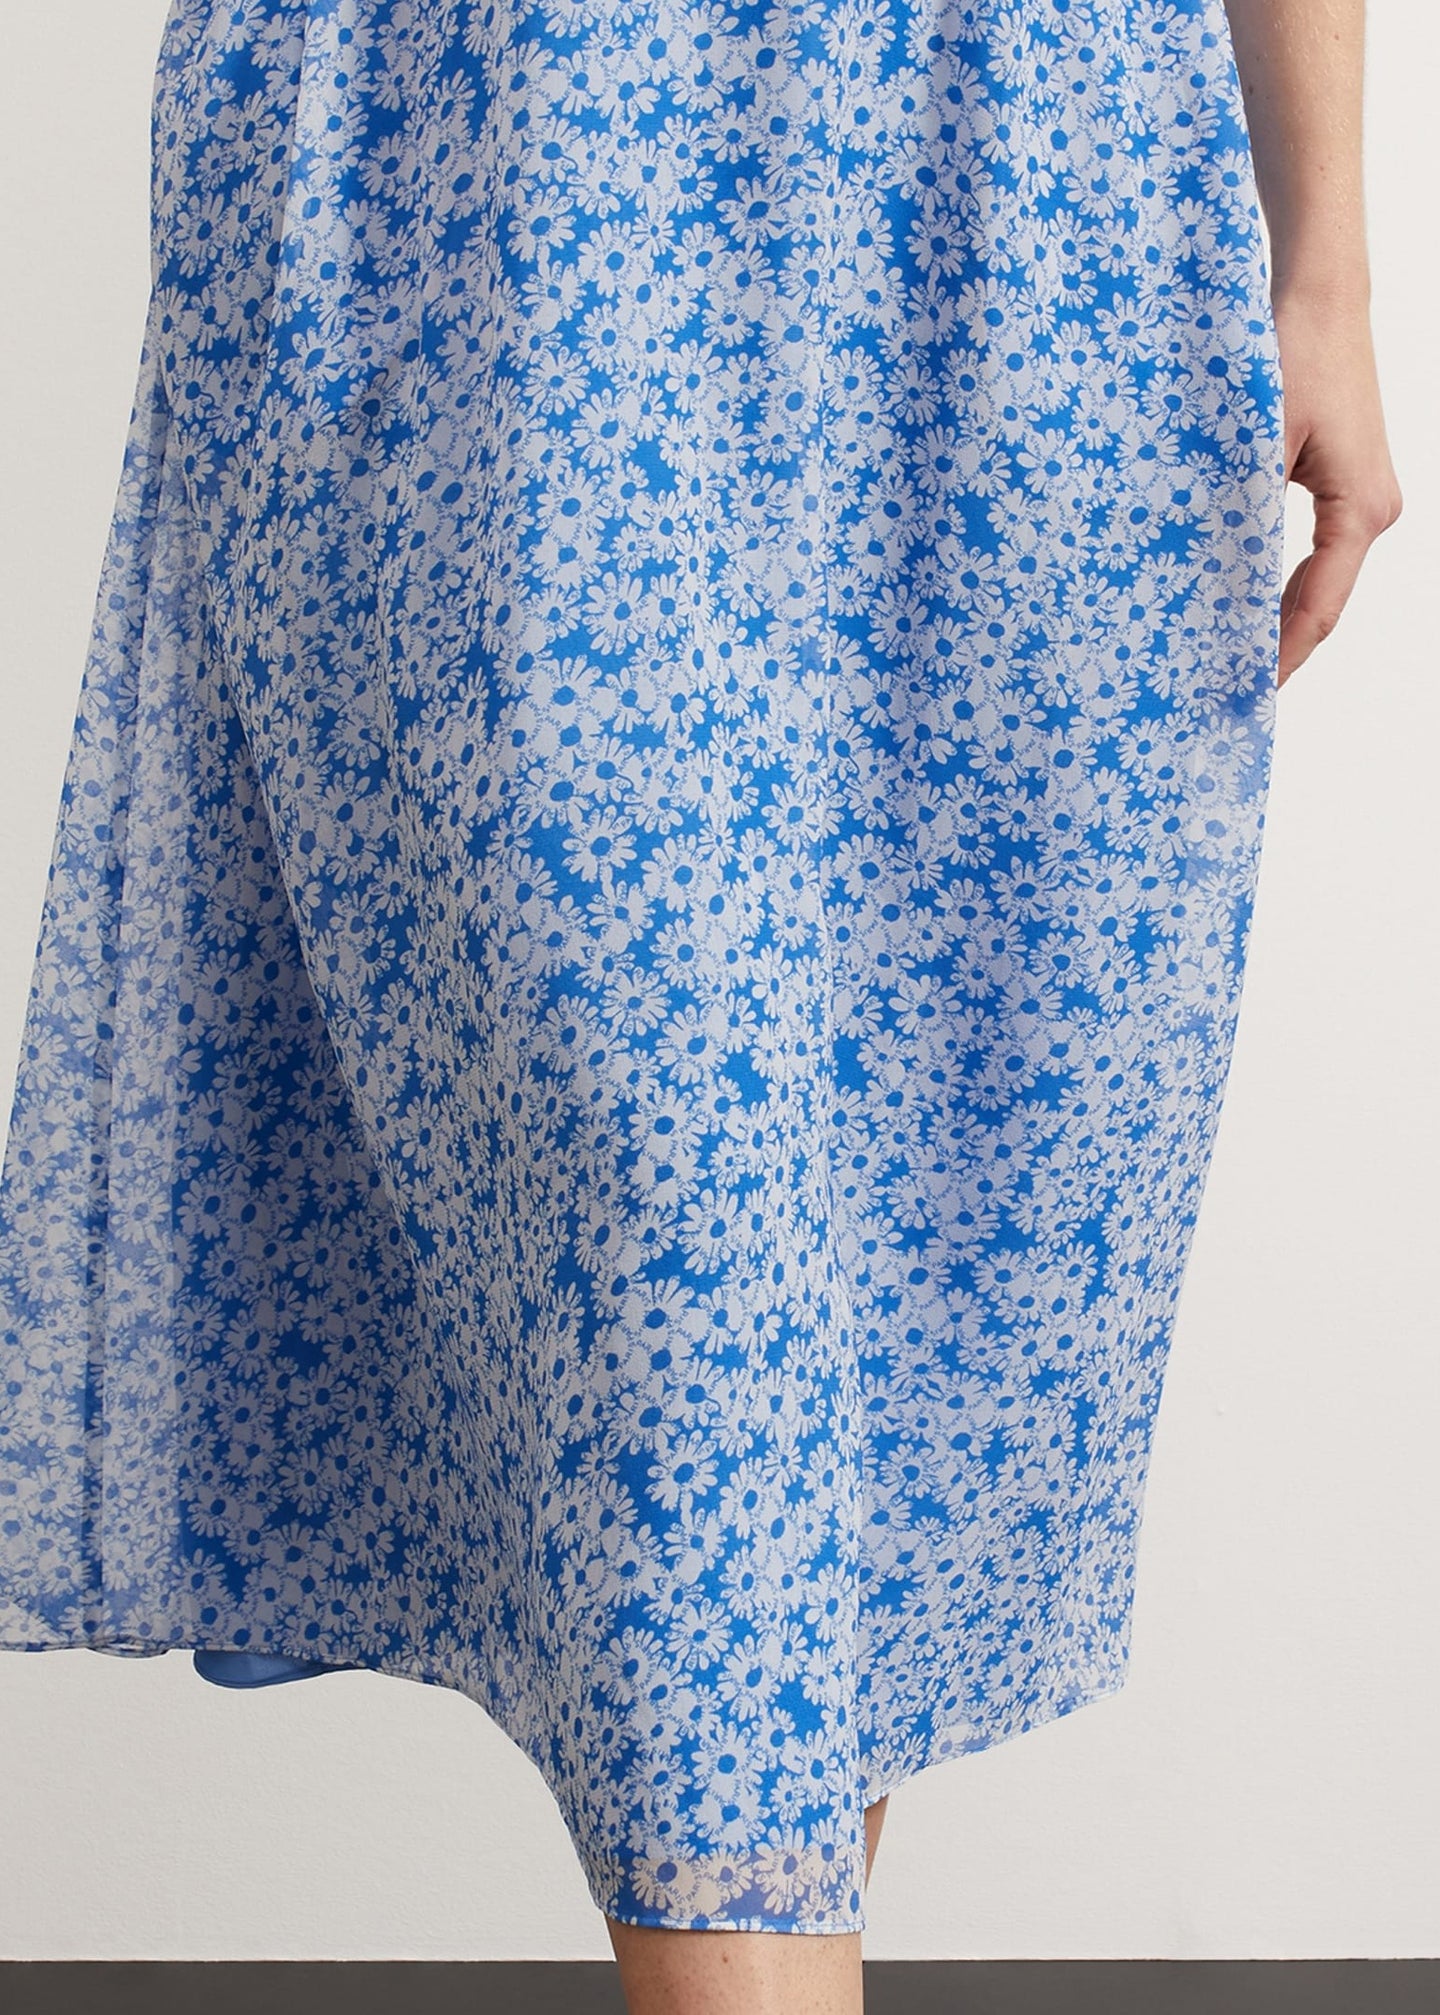 Forbury Paris Dress 0124/5363/9045l00 Blue-Ivory